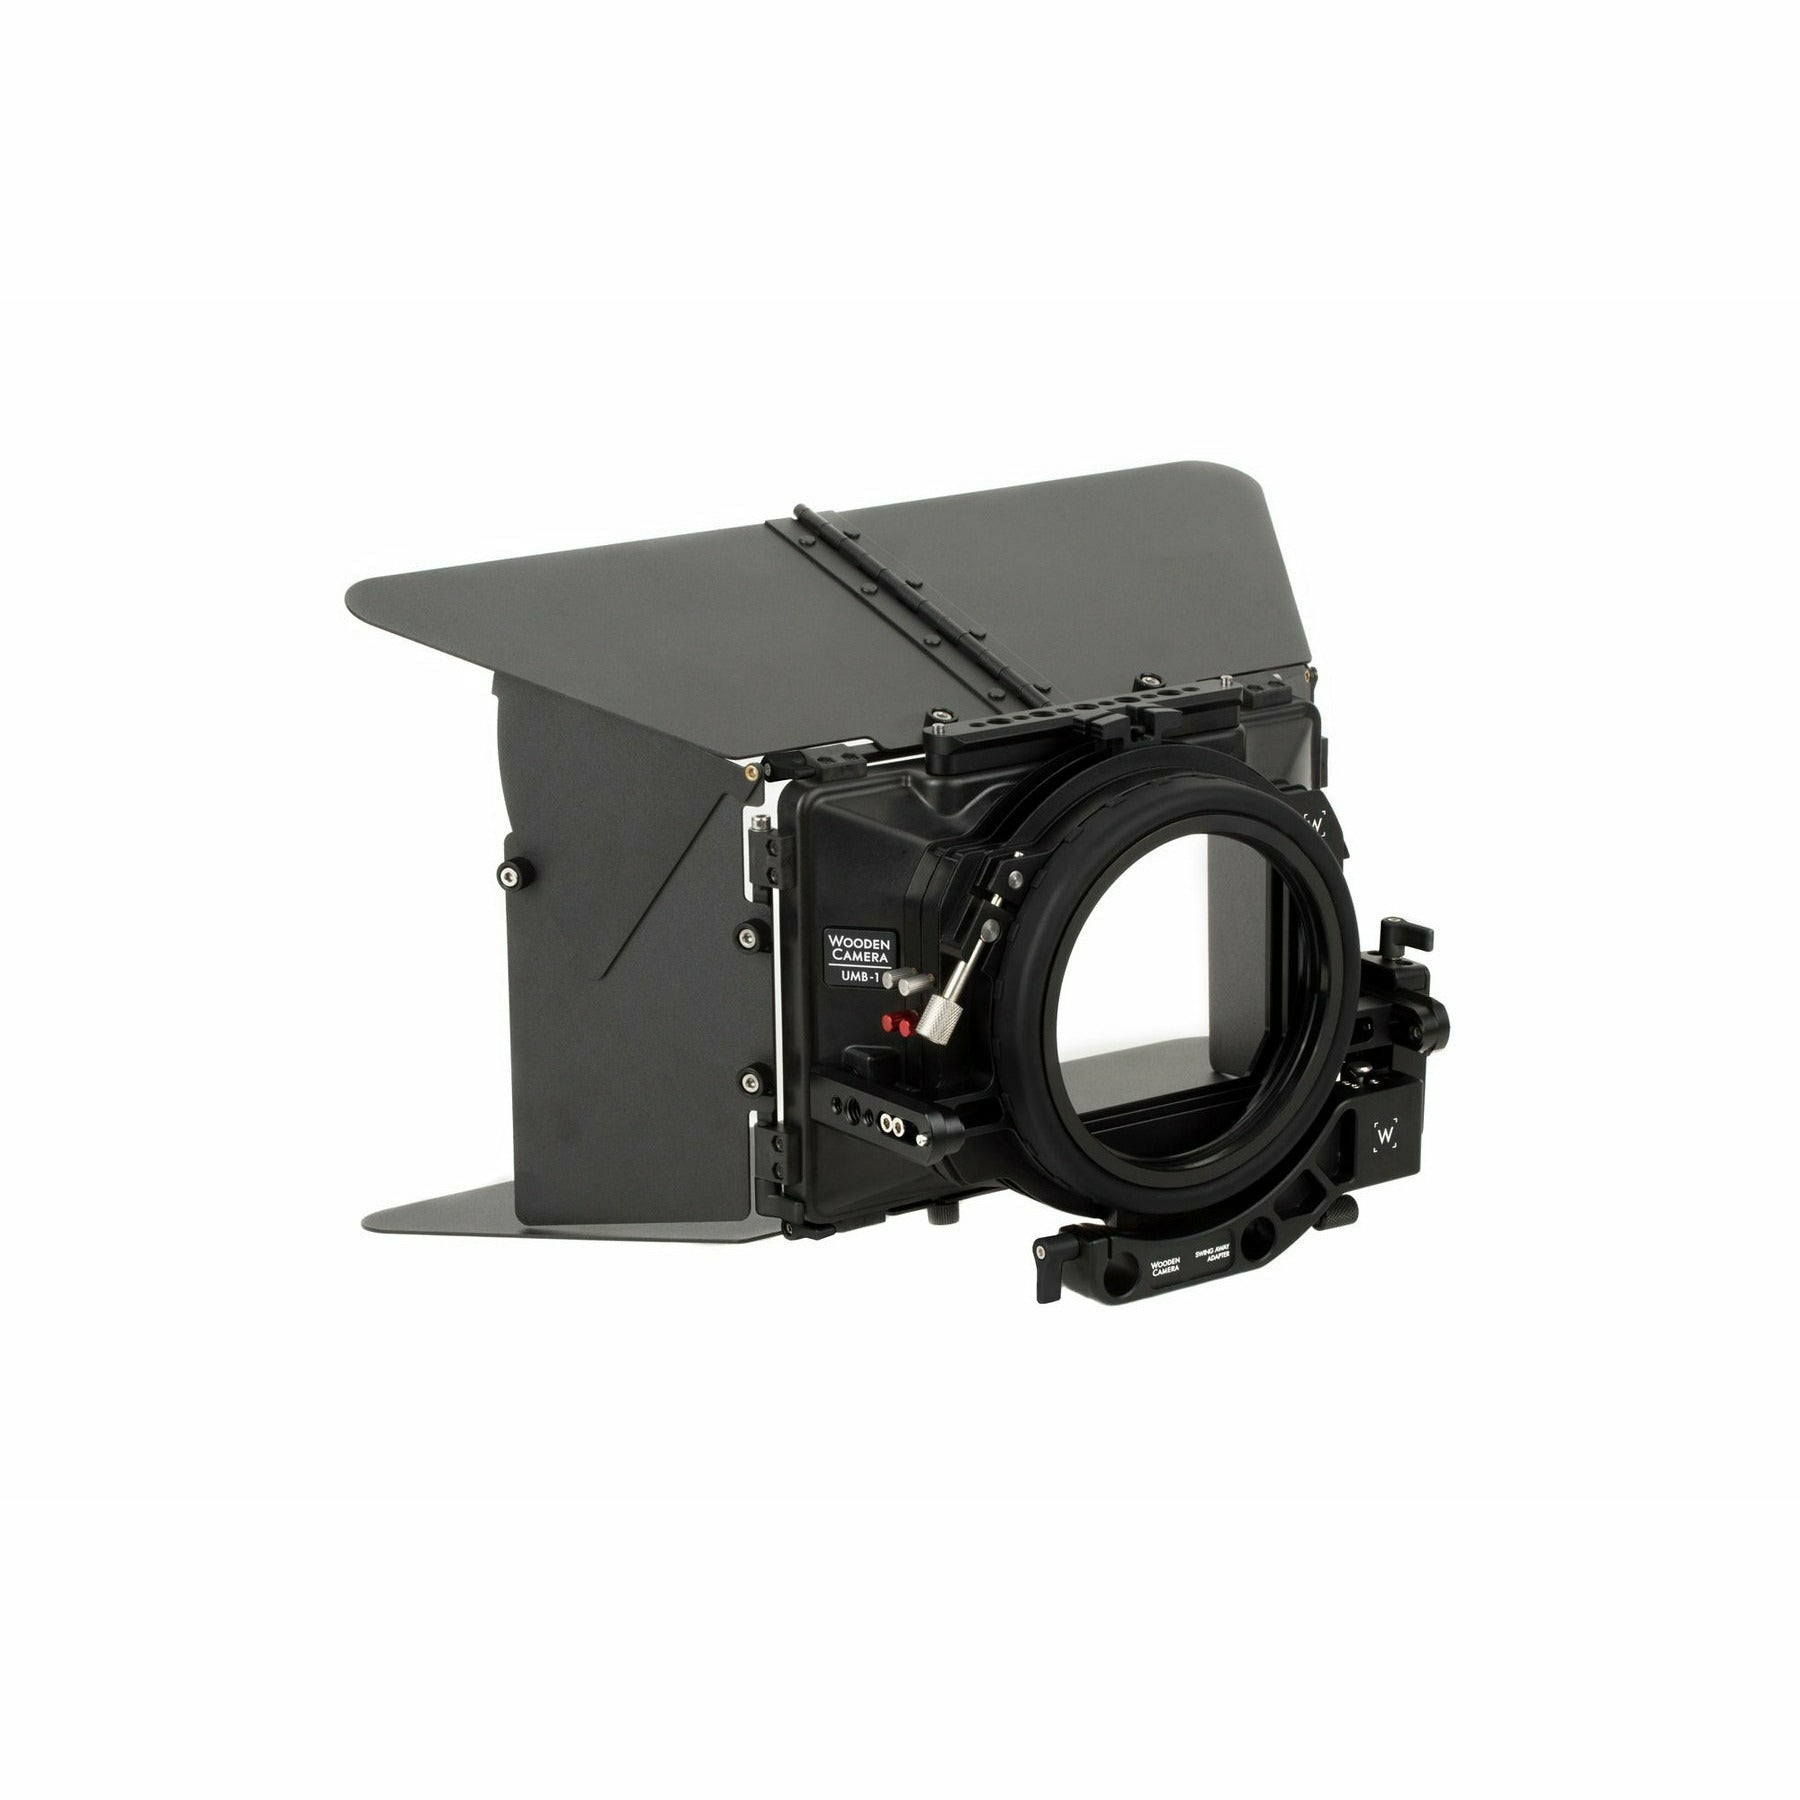 Wooden Camera - UMB-1 Universal Mattebox (Pro) - Dragon Image